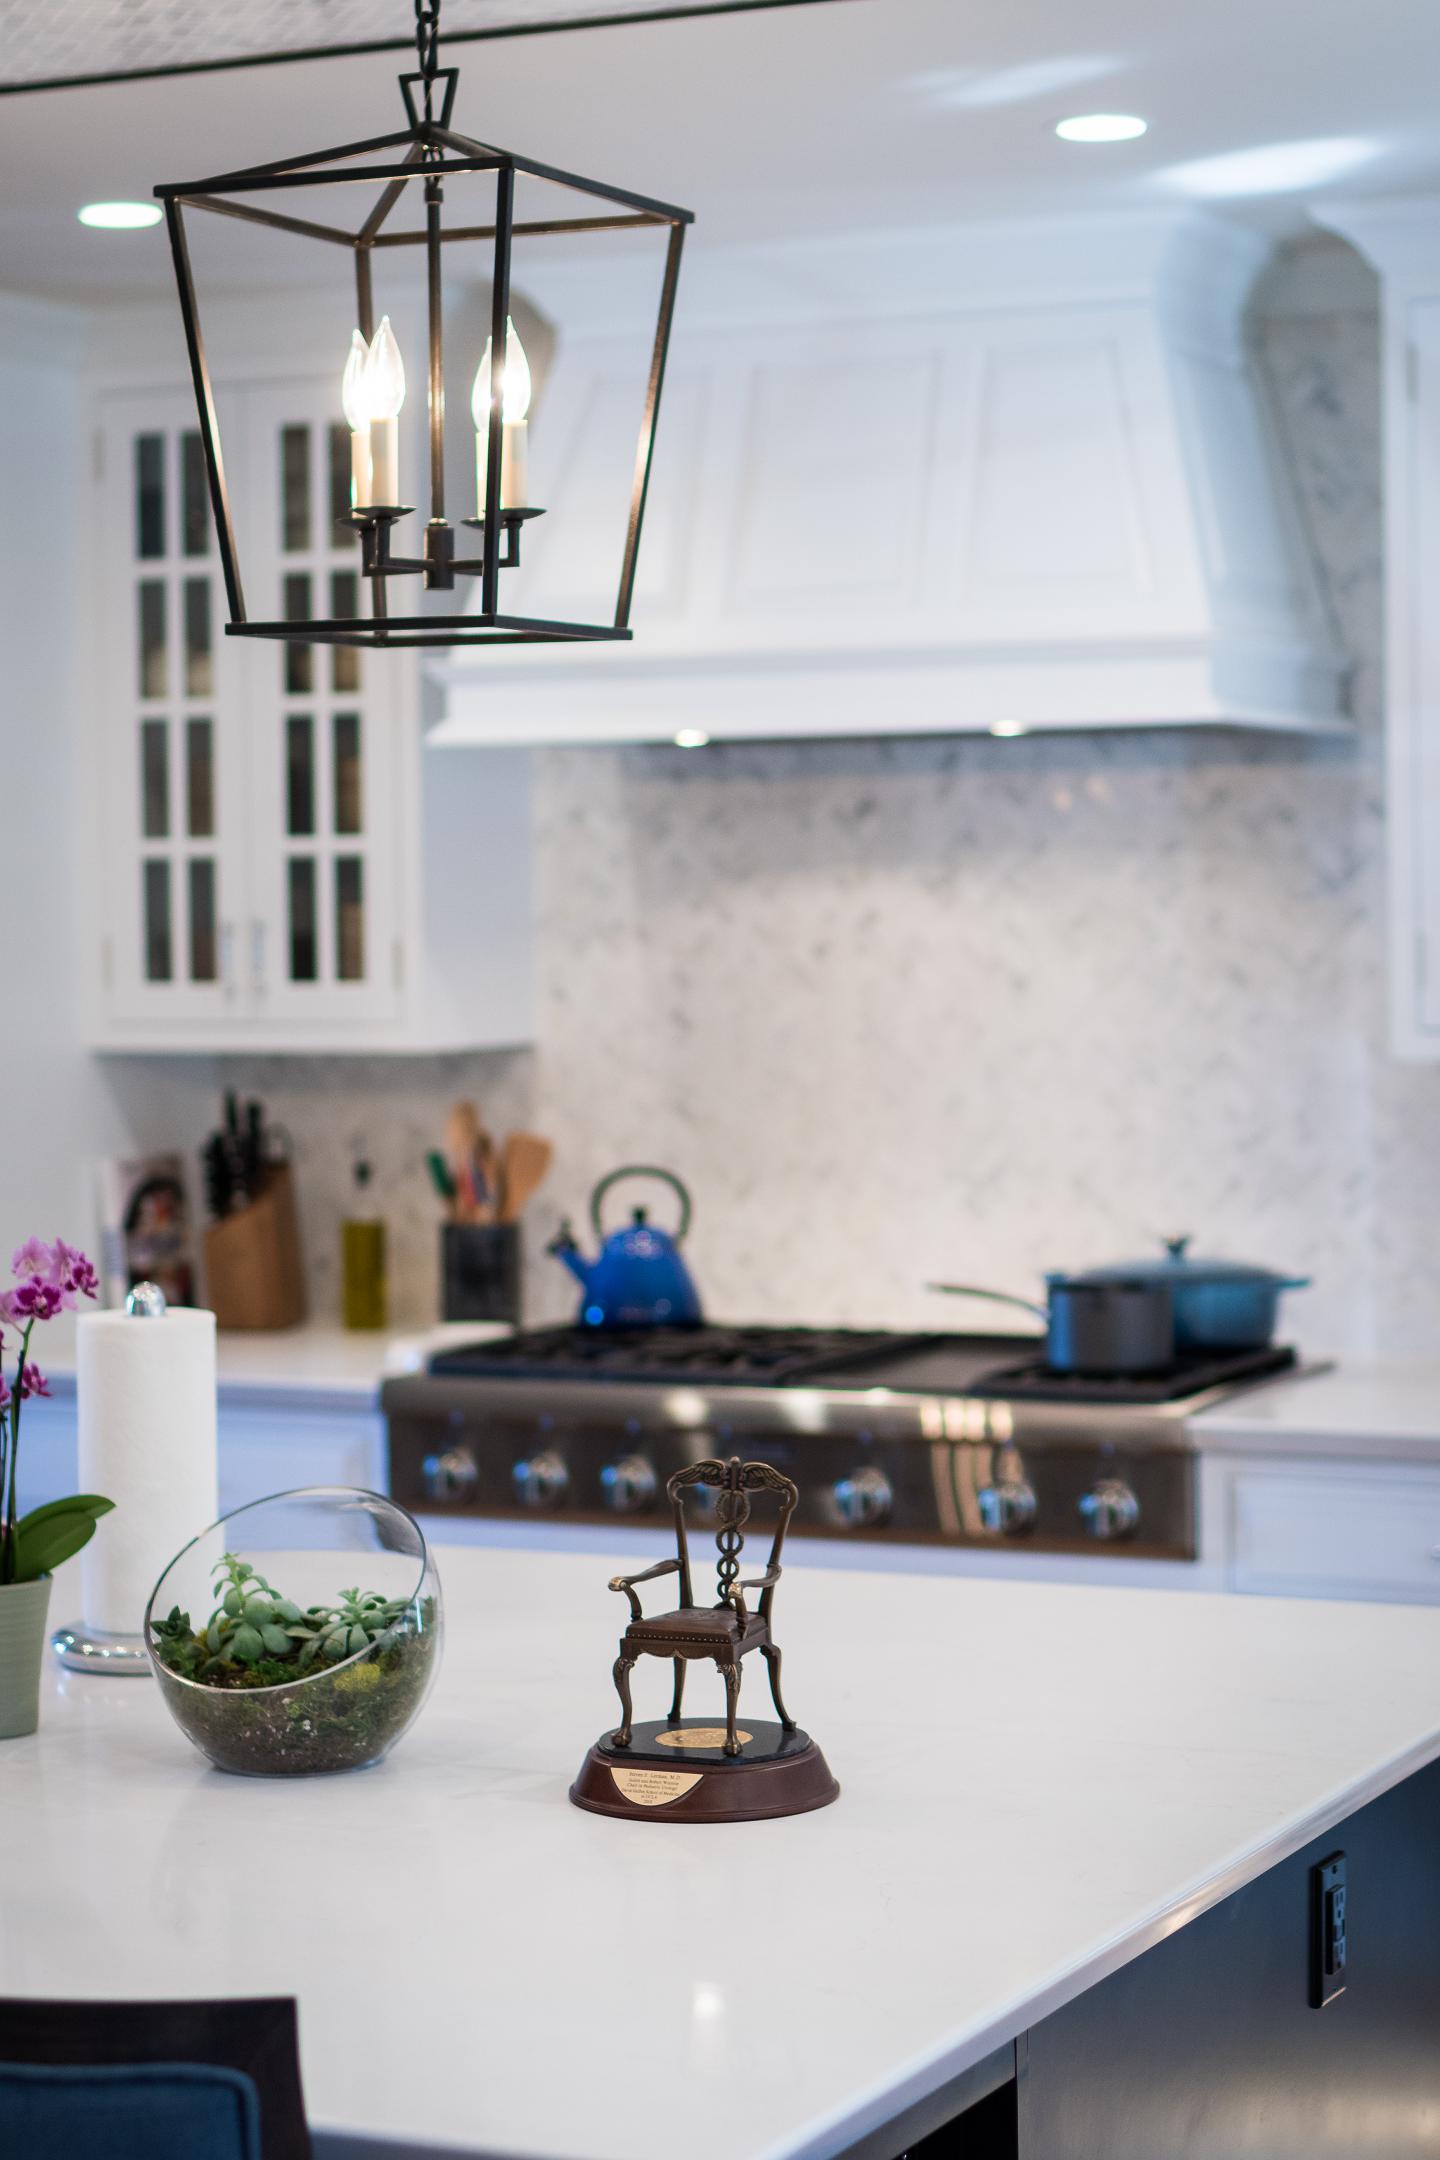 Elegant kitchen interior with modern lighting and marble backsplash.